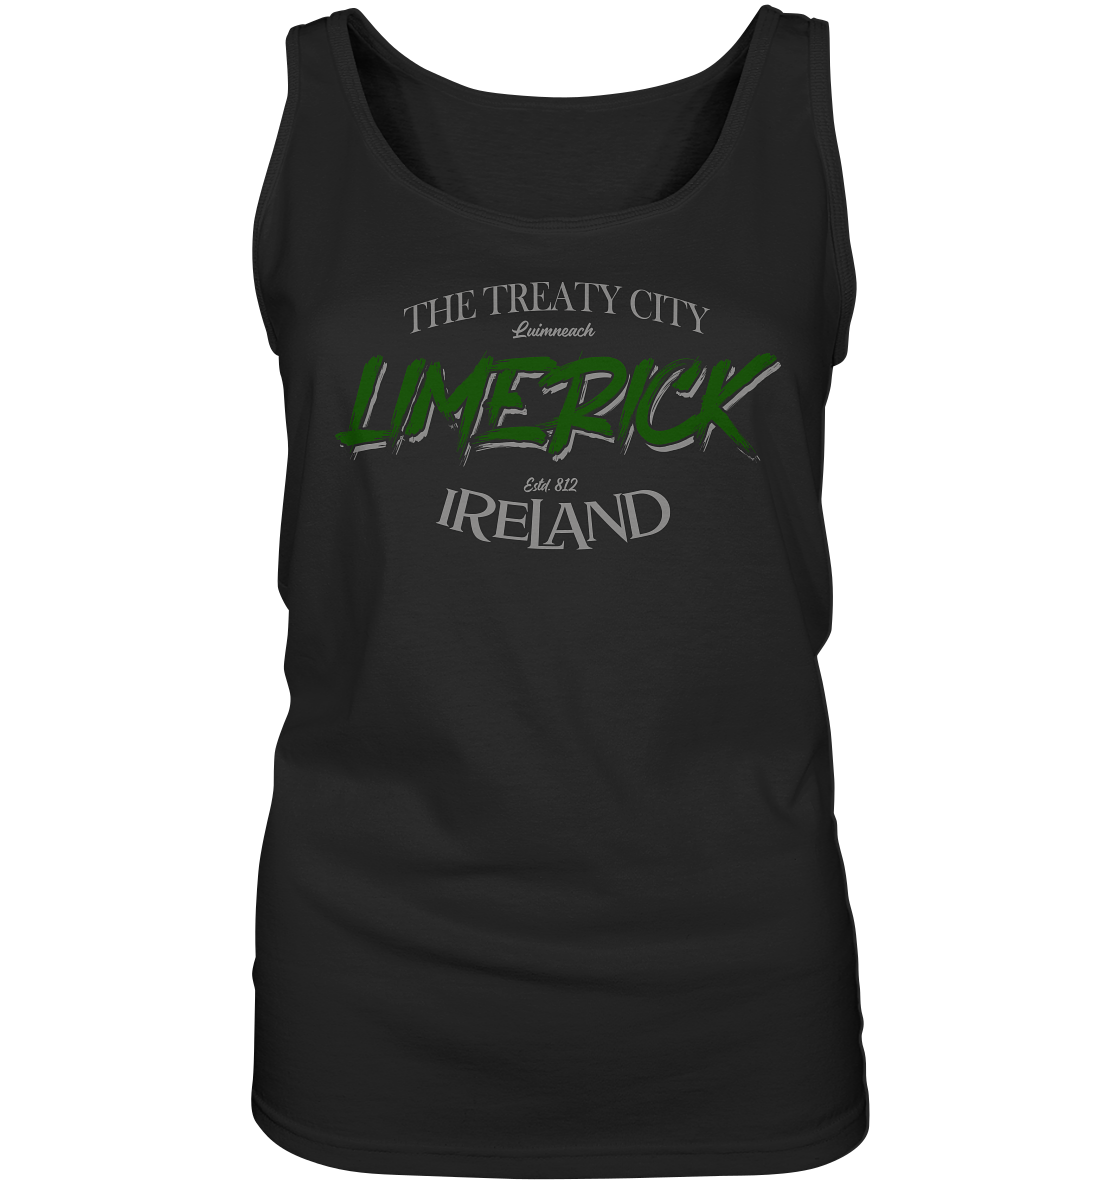 Limerick "The Treaty City" - Ladies Tank-Top